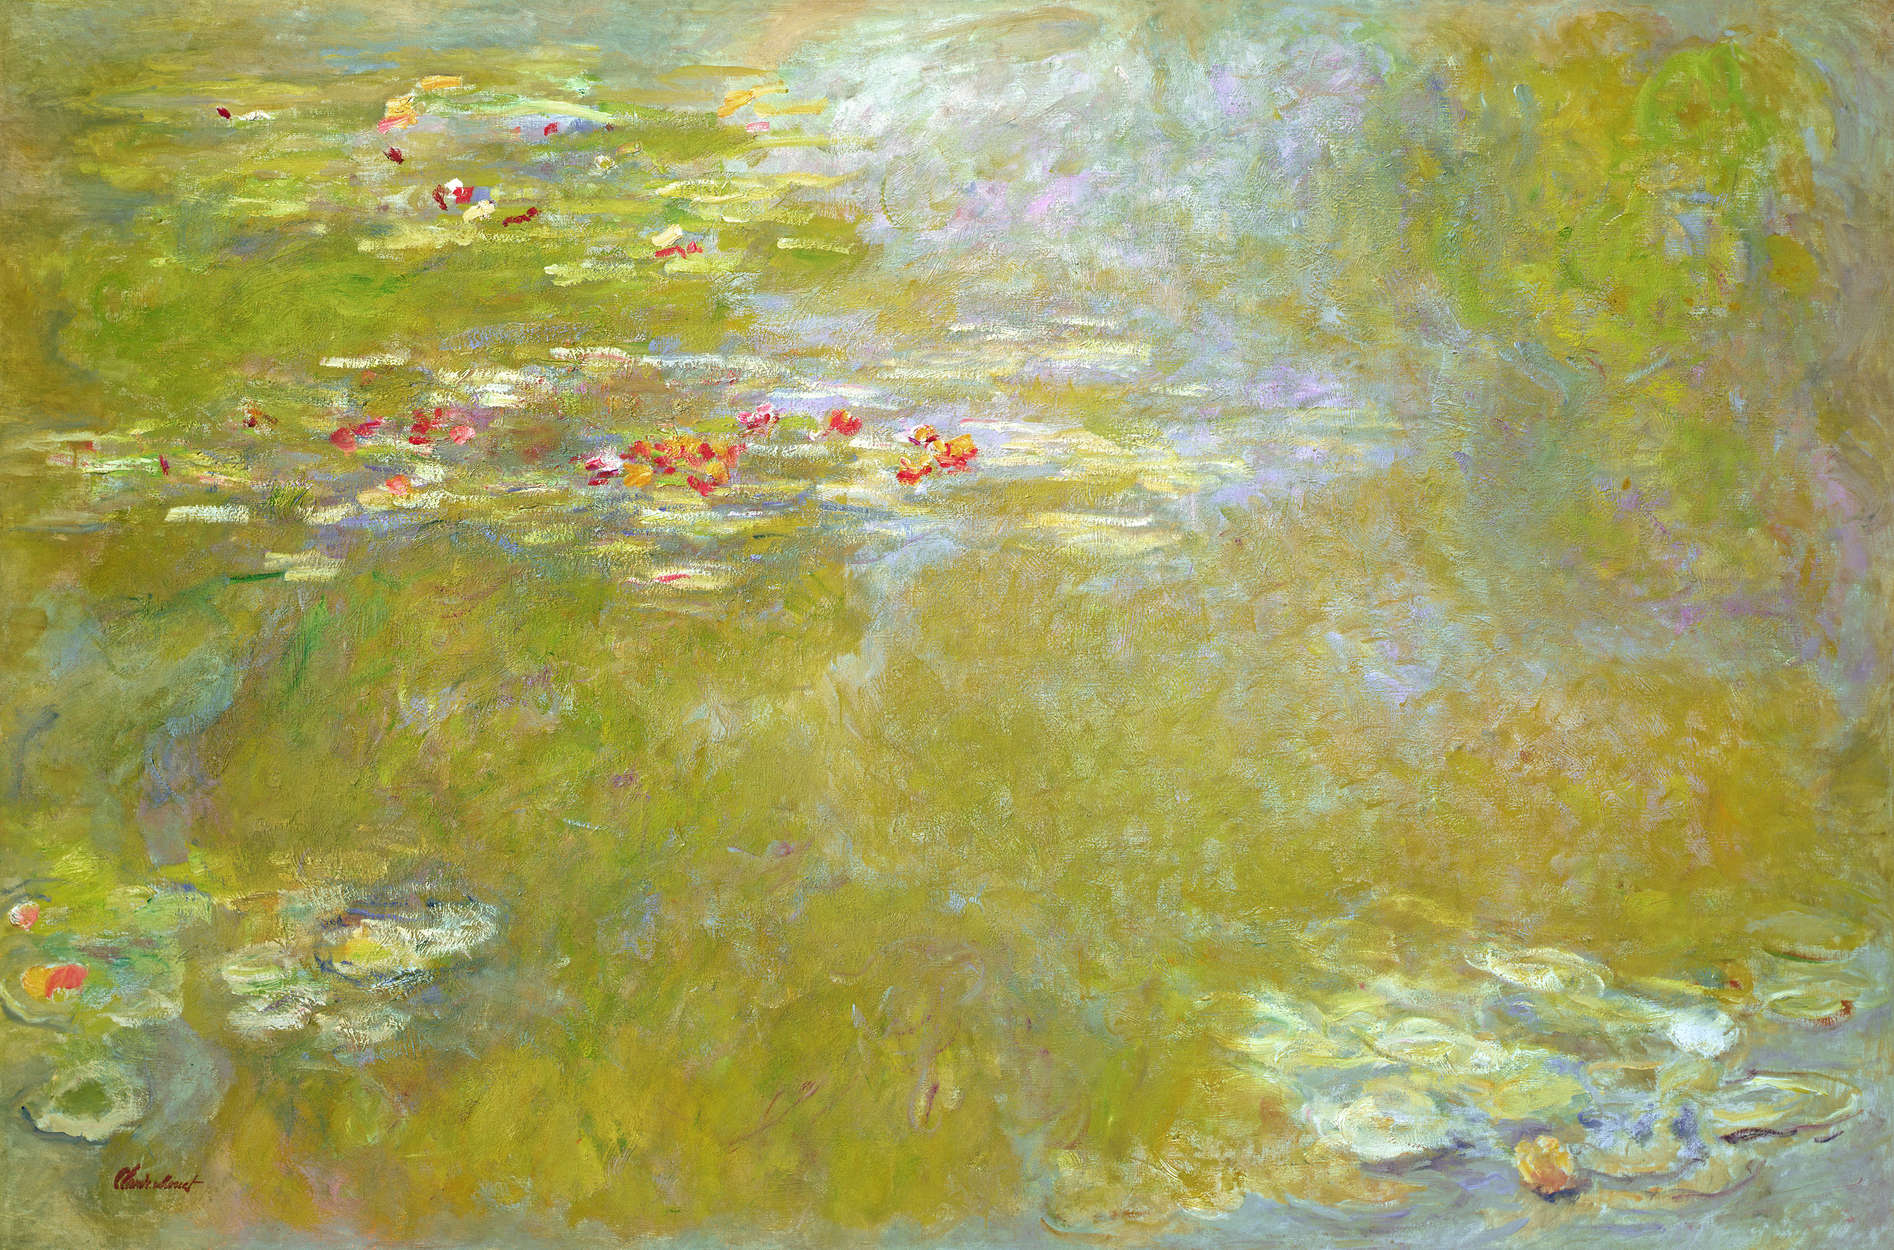             Il murale "Le Ninfe" di Claude Monet
        